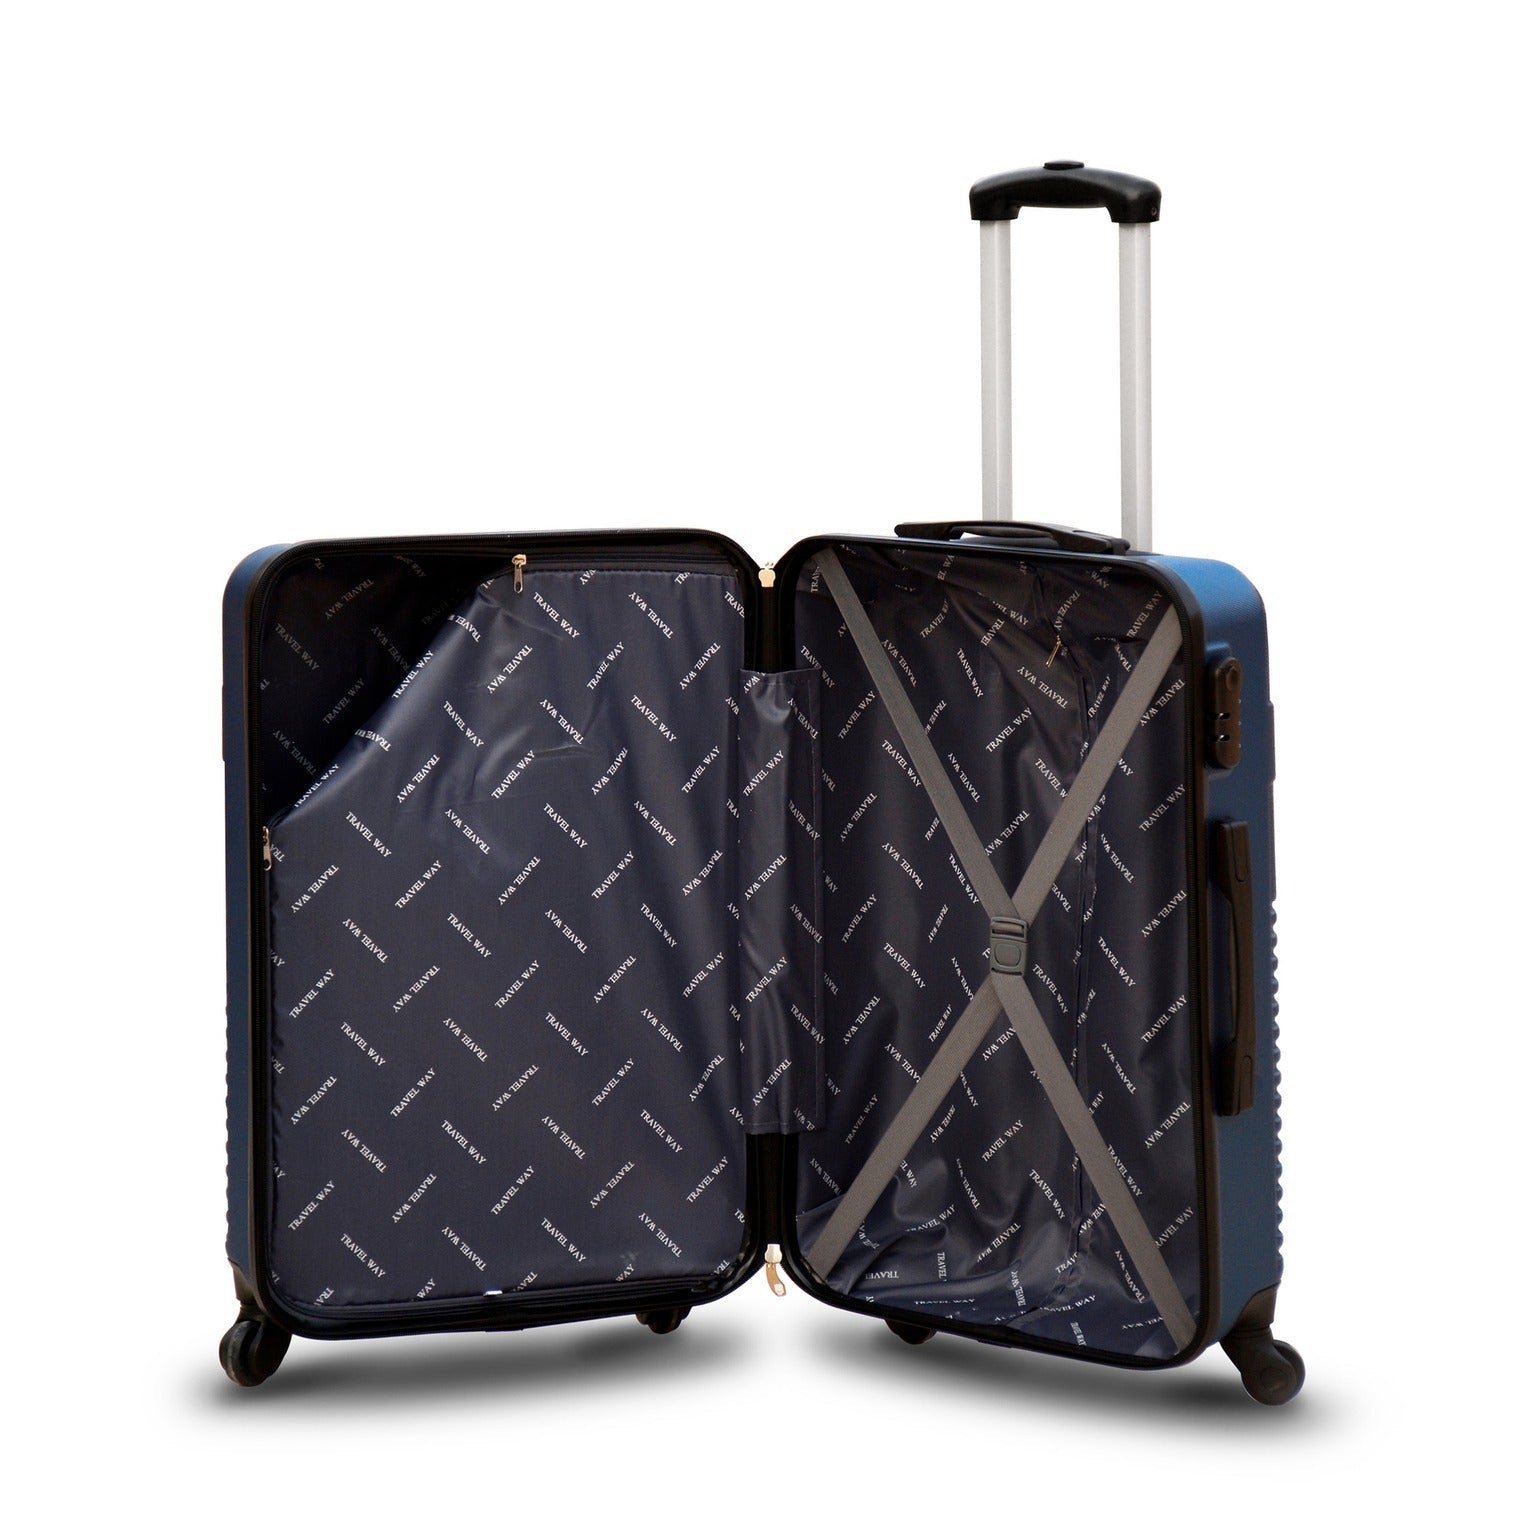 32" Blue Travel Way ABS Lightweight Hard Case Luggage Bag